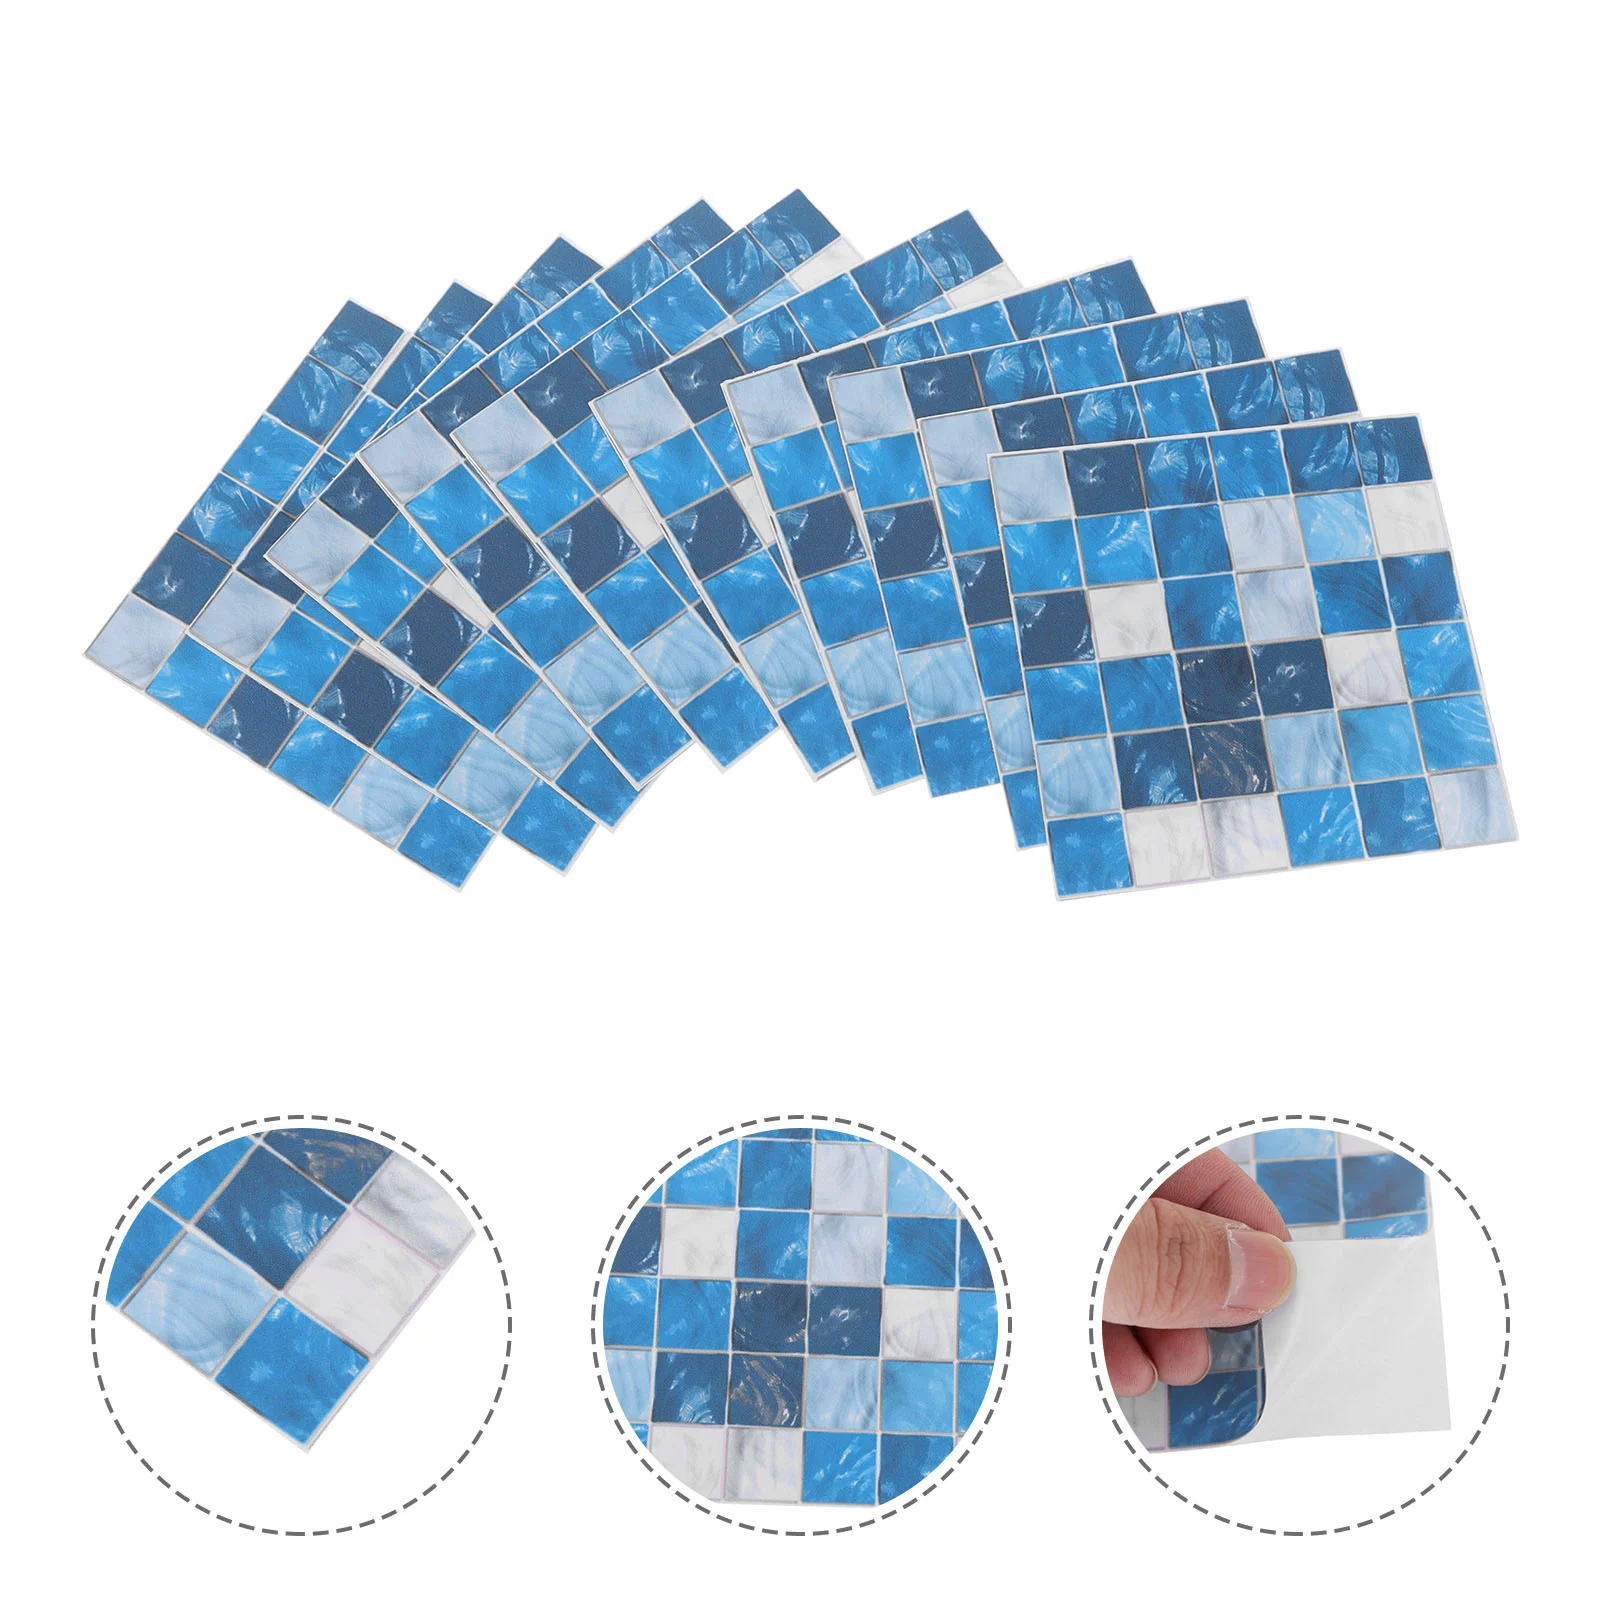 

50 Pcs Window Film Decor Home Blue Tile Backsplash Bleucoin Tiles Simulated Small Tile Stickers Household Marble Vinyl Decal